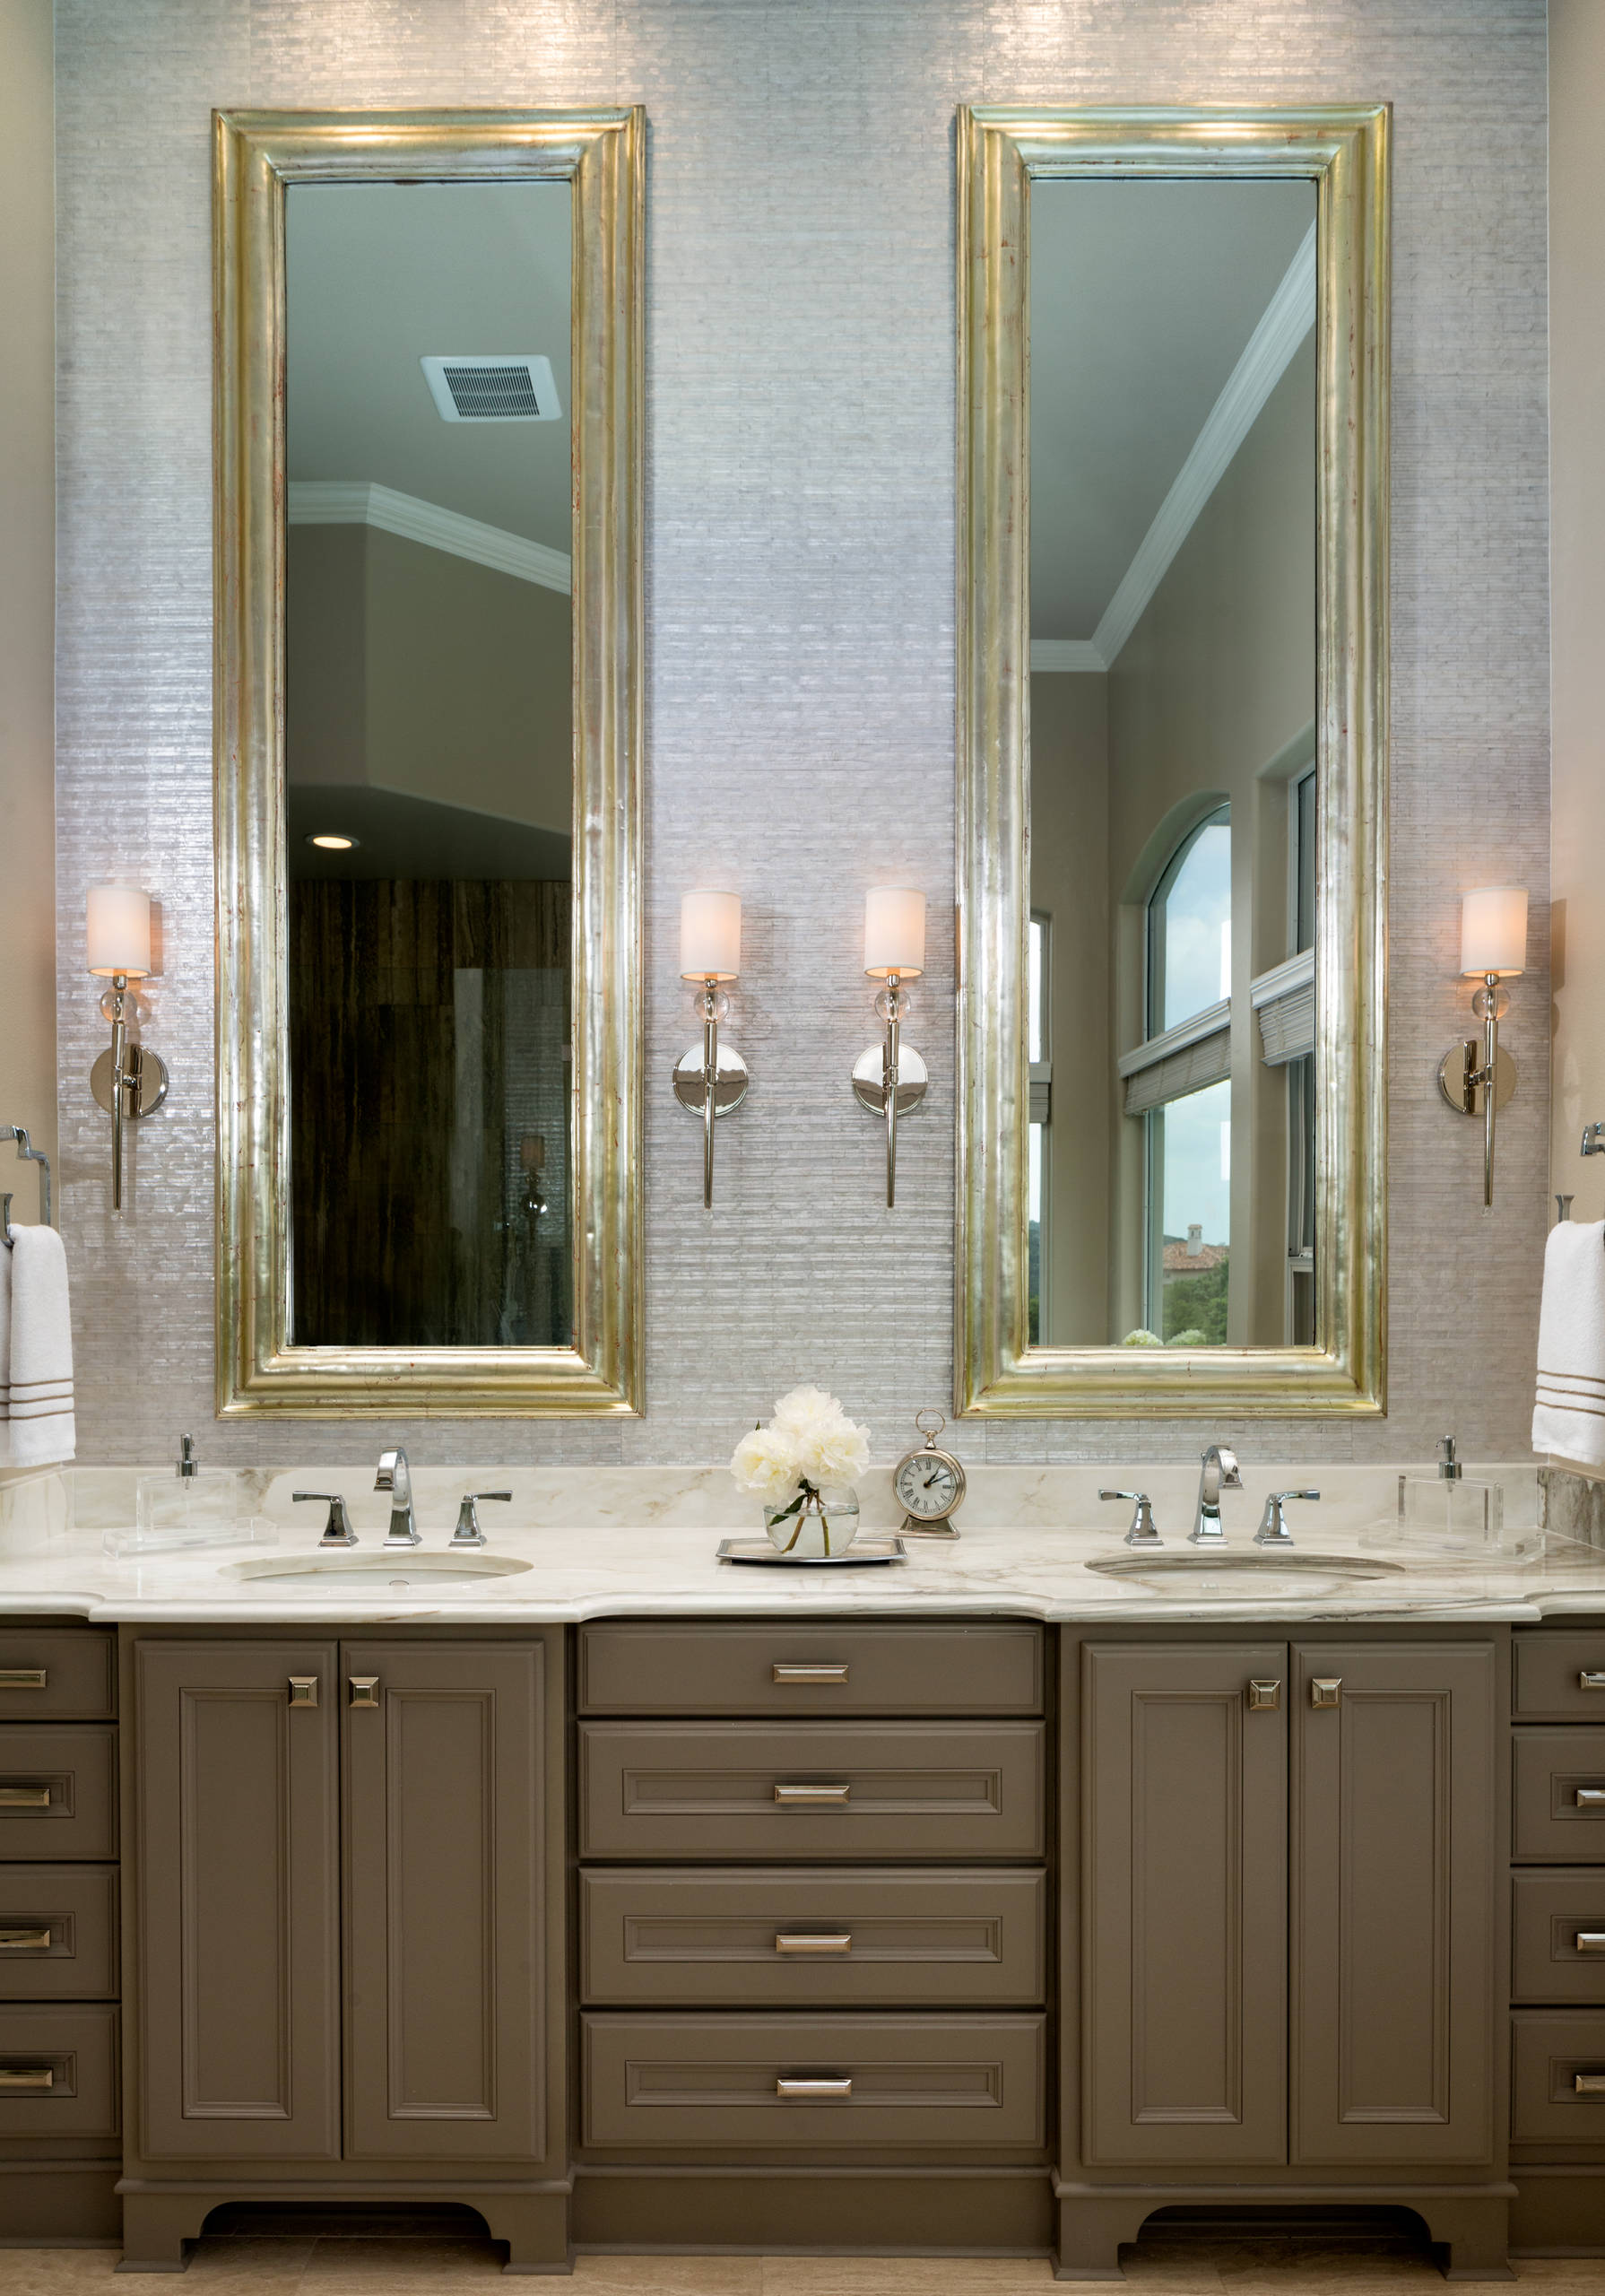 Tall Bathroom Mirror Houzz, Tall Bathroom Vanity With Mirror